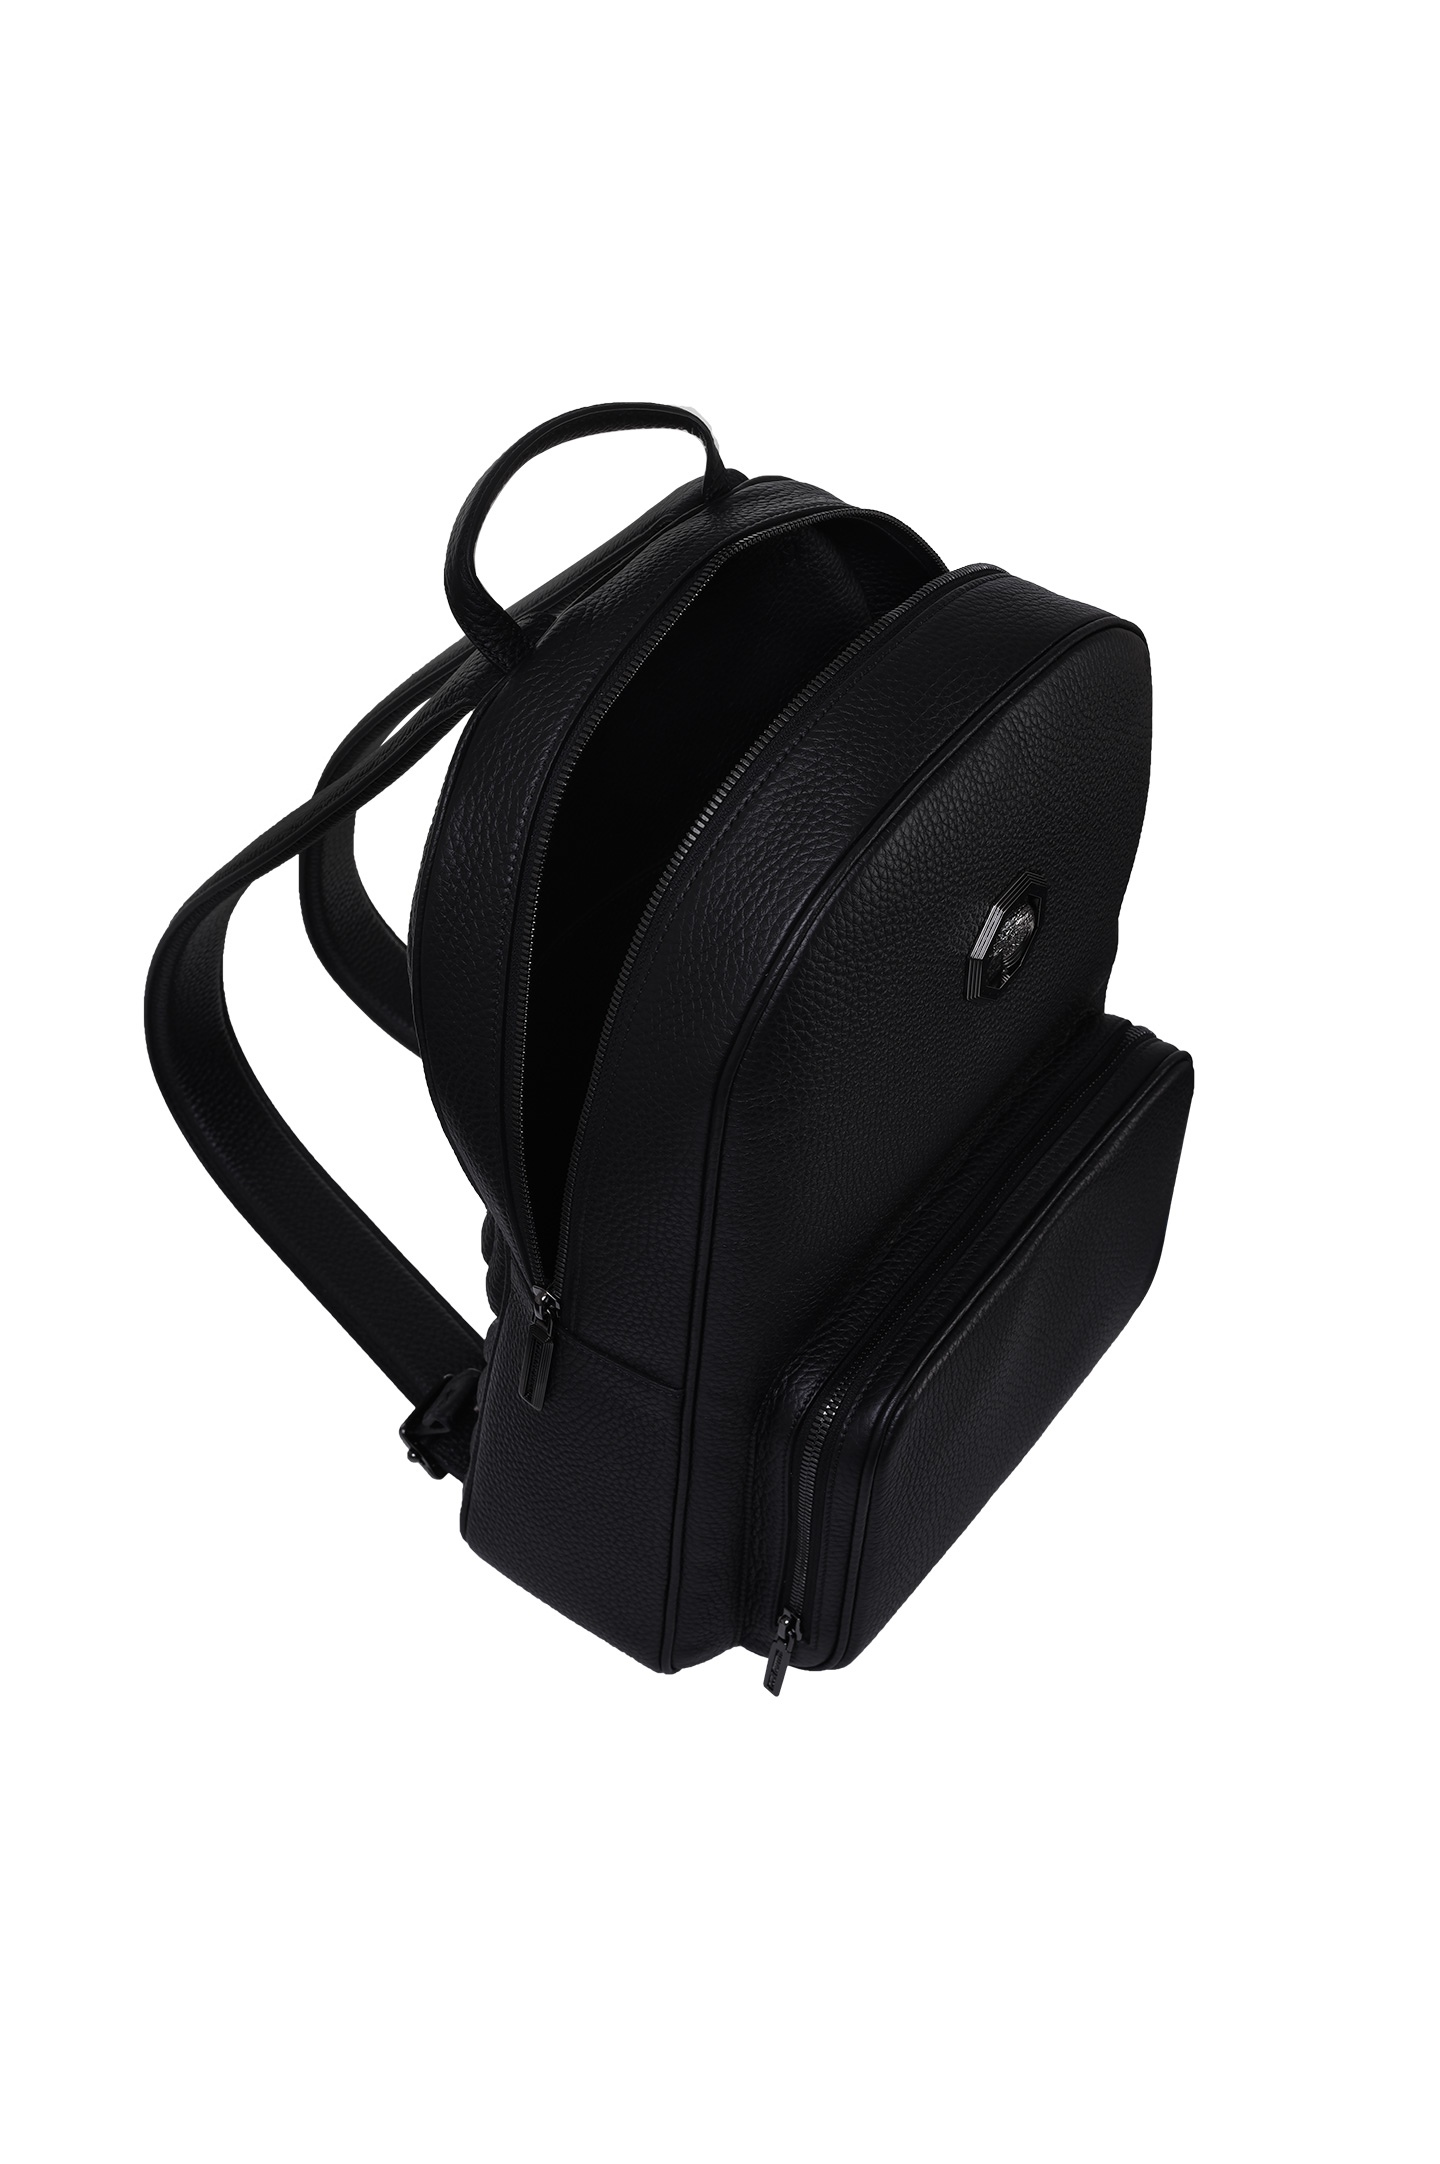 Рюкзак STEFANO RICCI ND150U VD, цвет: Черный, Мужской